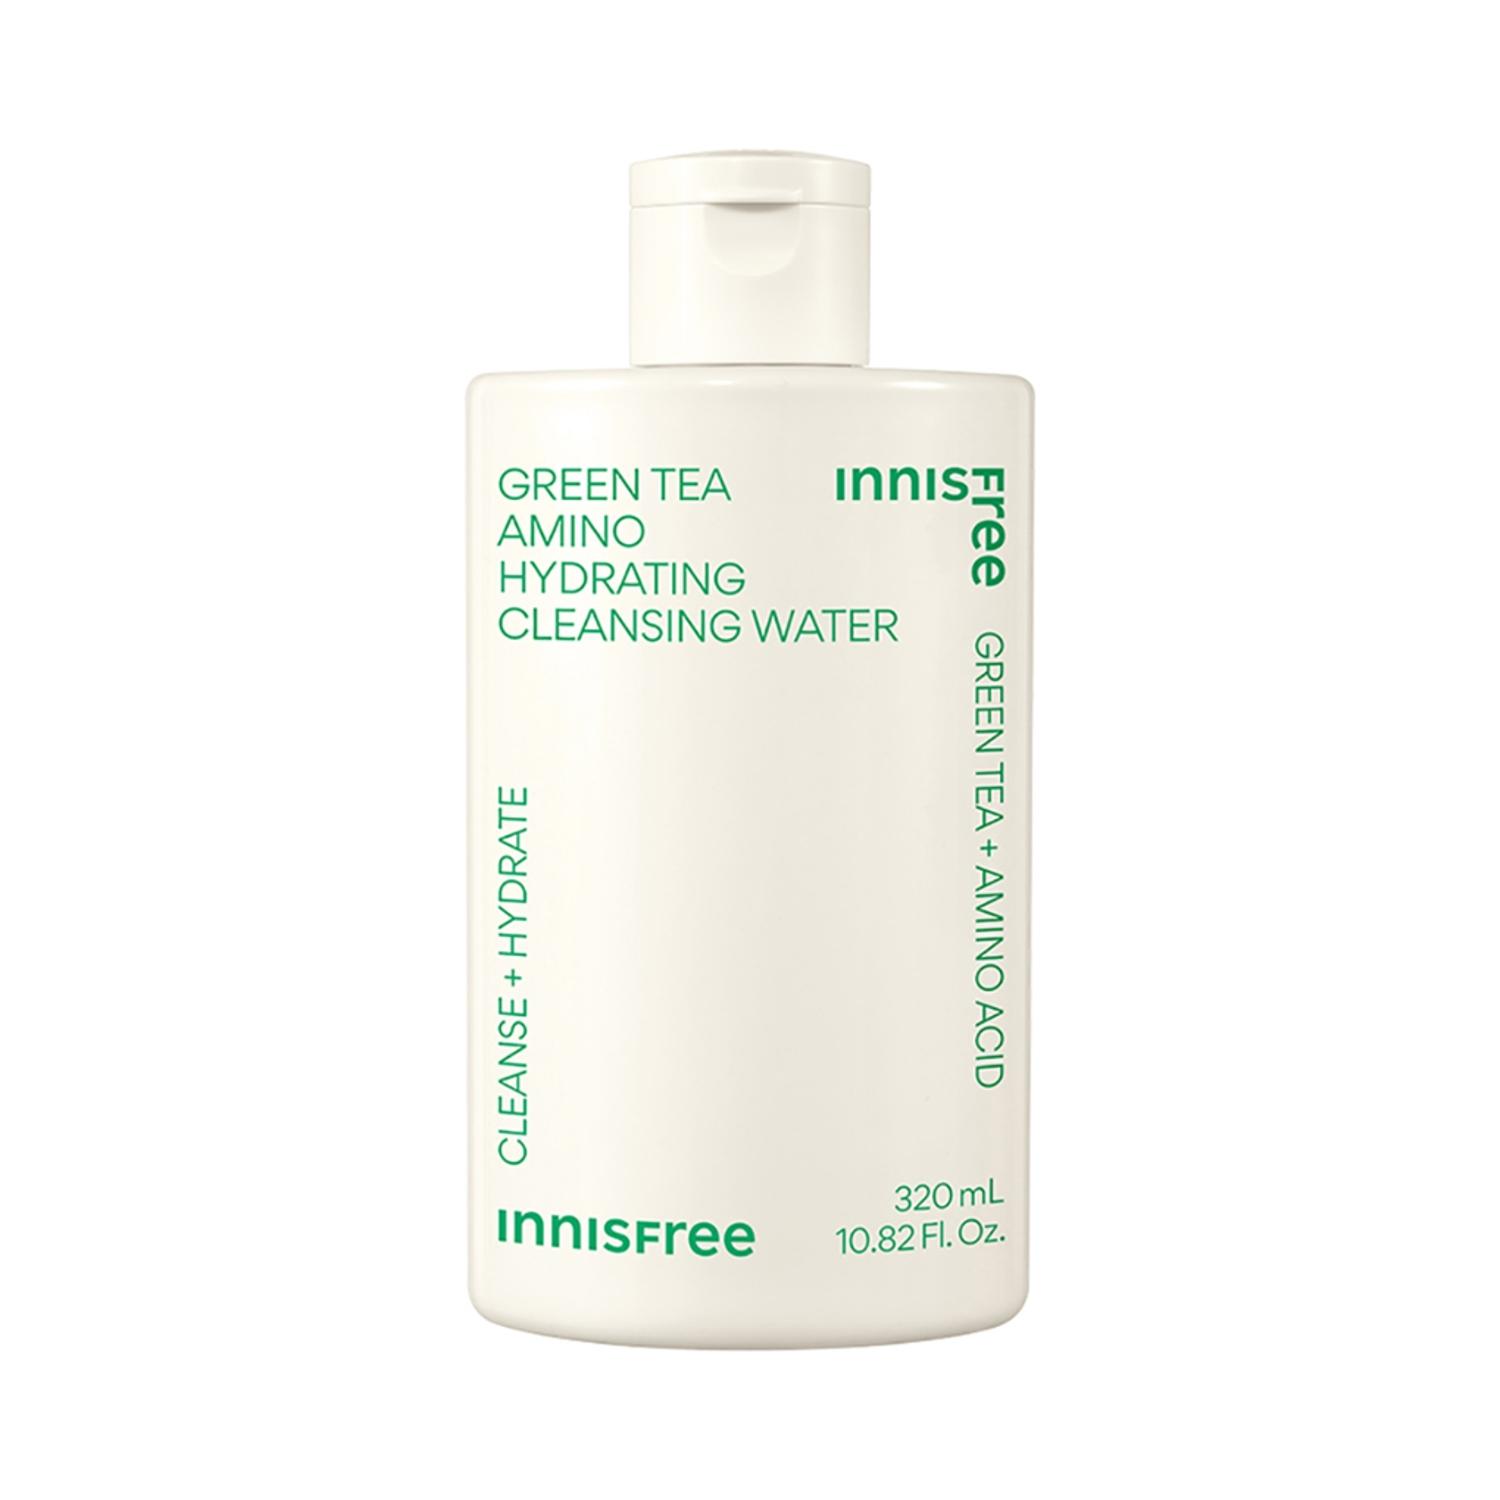 innisfree-green-tea-amino-cleansing-water-(320ml)